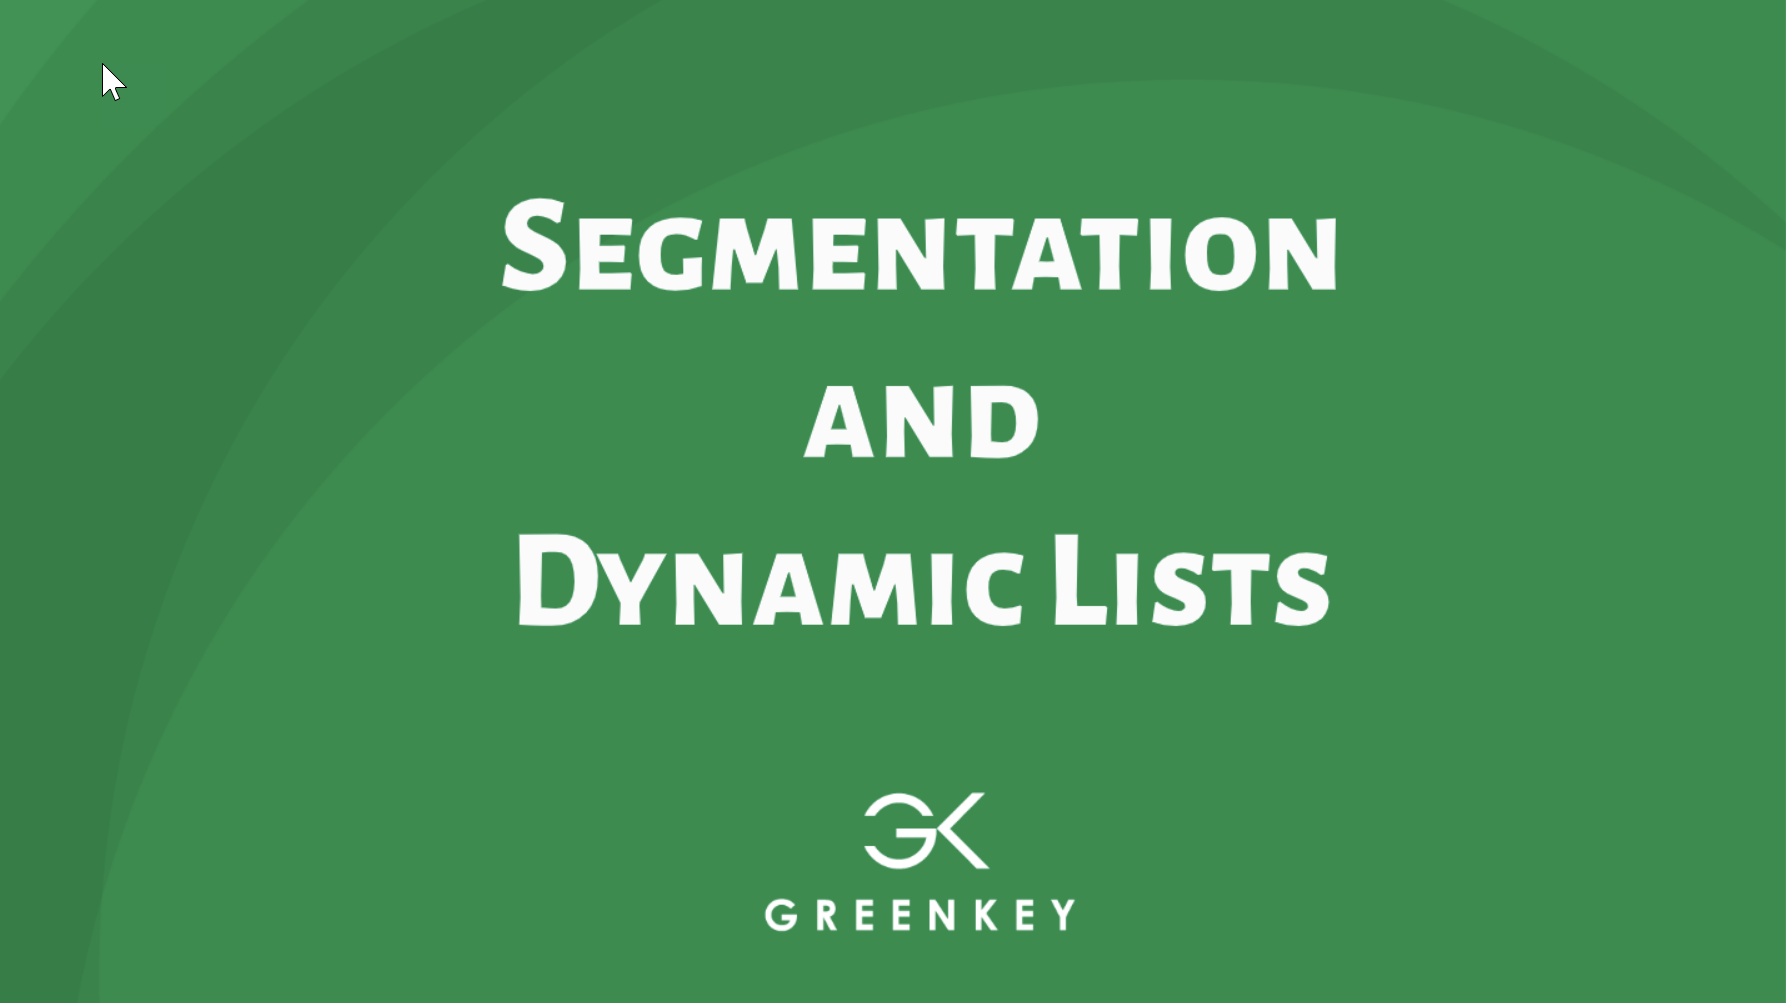 Account Engagement Segmentation and dynamic lists